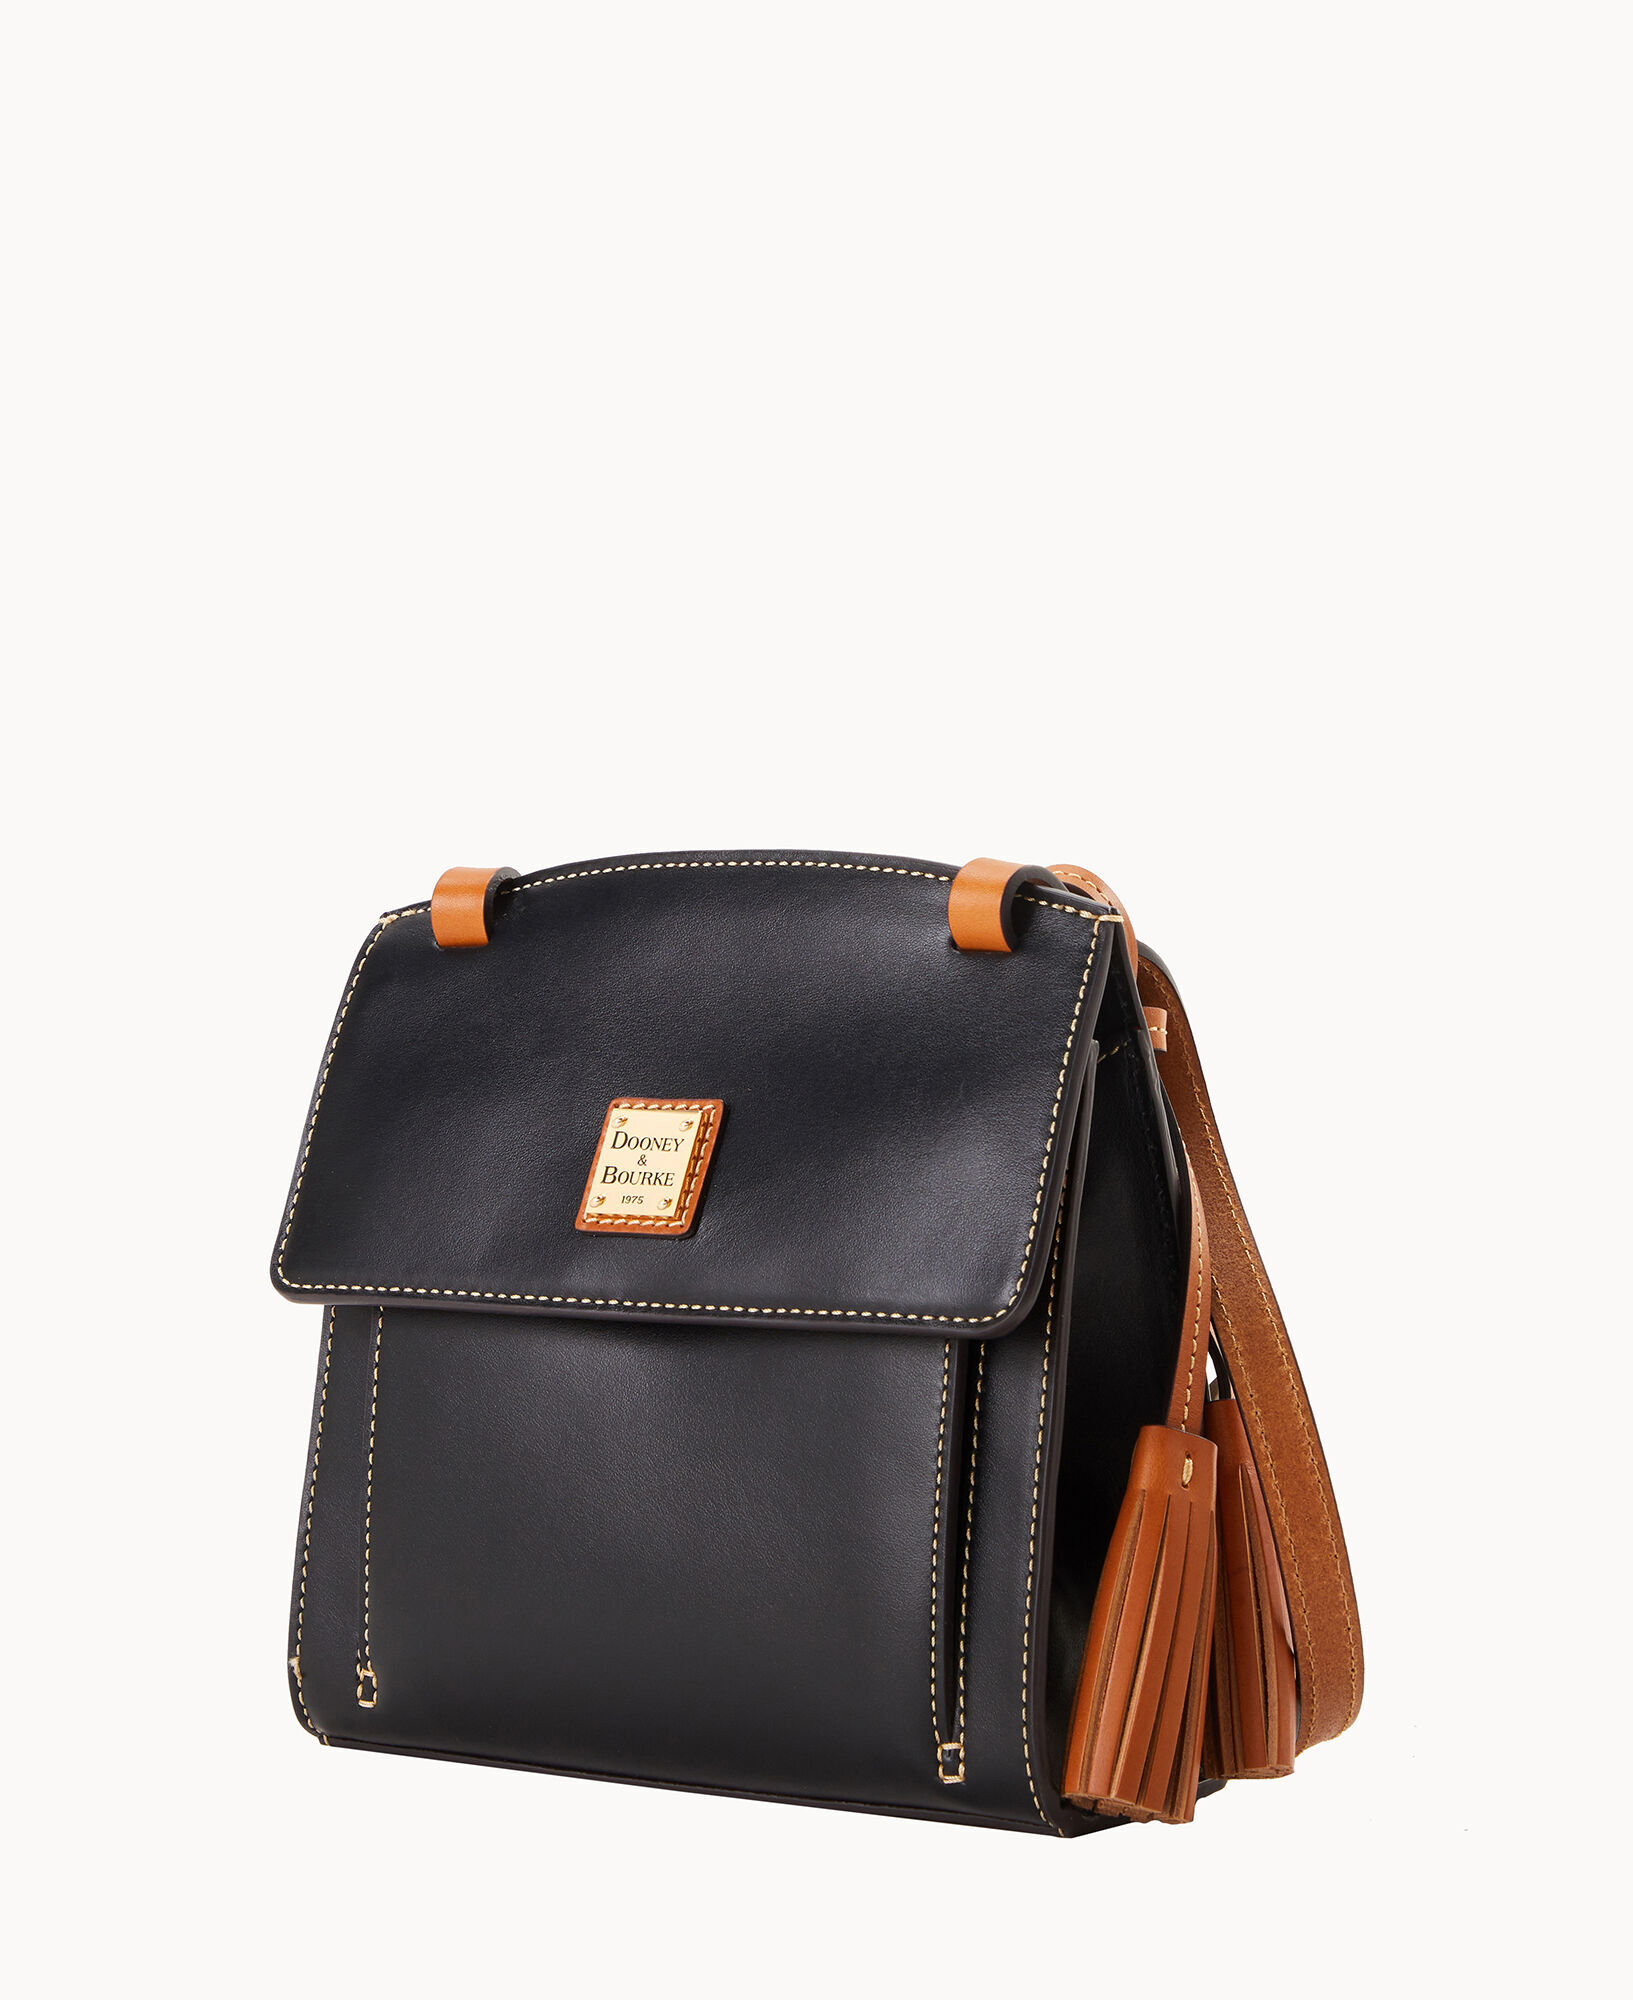 Dooney & Bourke Handbag, Wexford Leather Crossbody Bucket - Black: Handbags